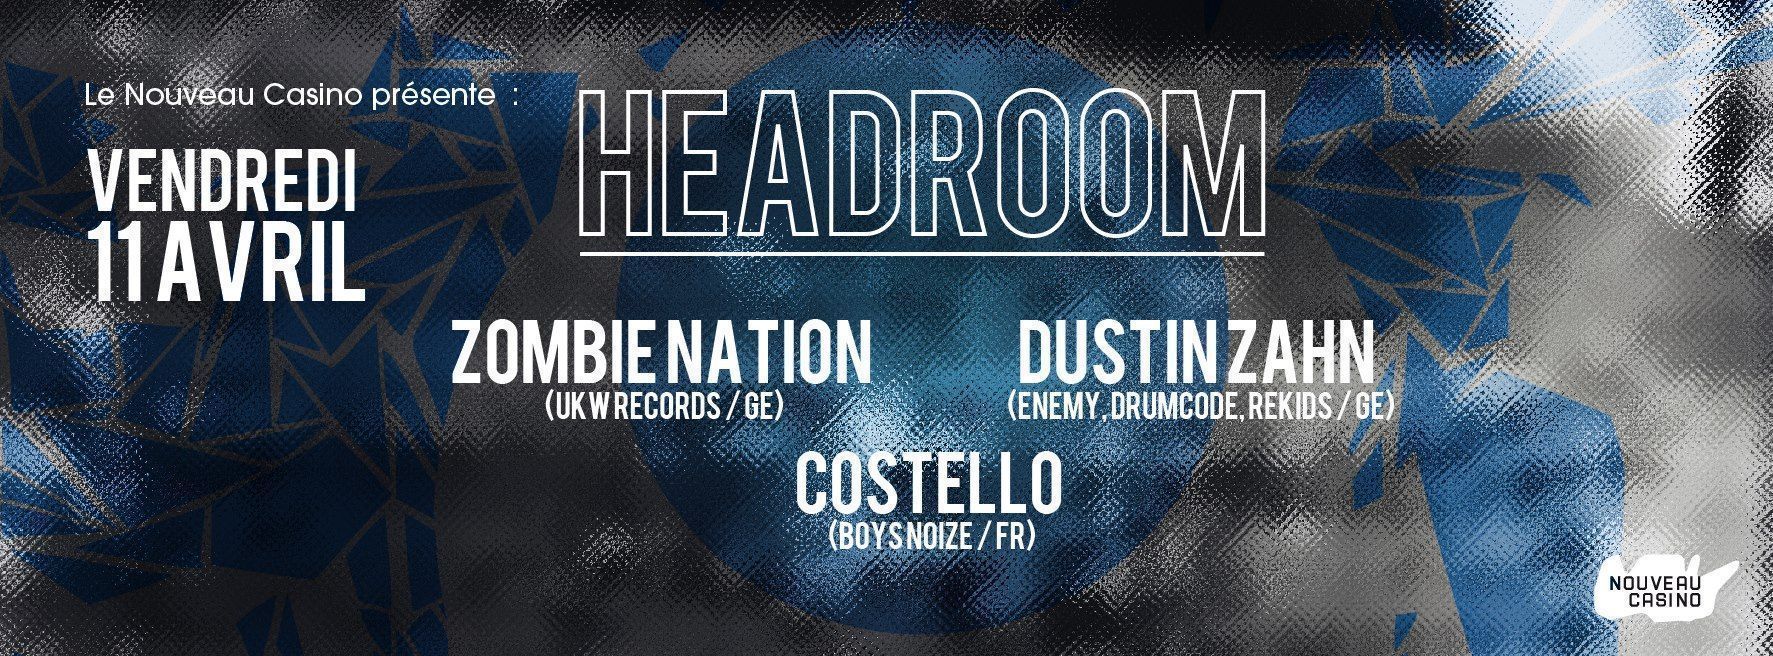 Headroom - Dustin Zahn - Costello - Zombie Nation